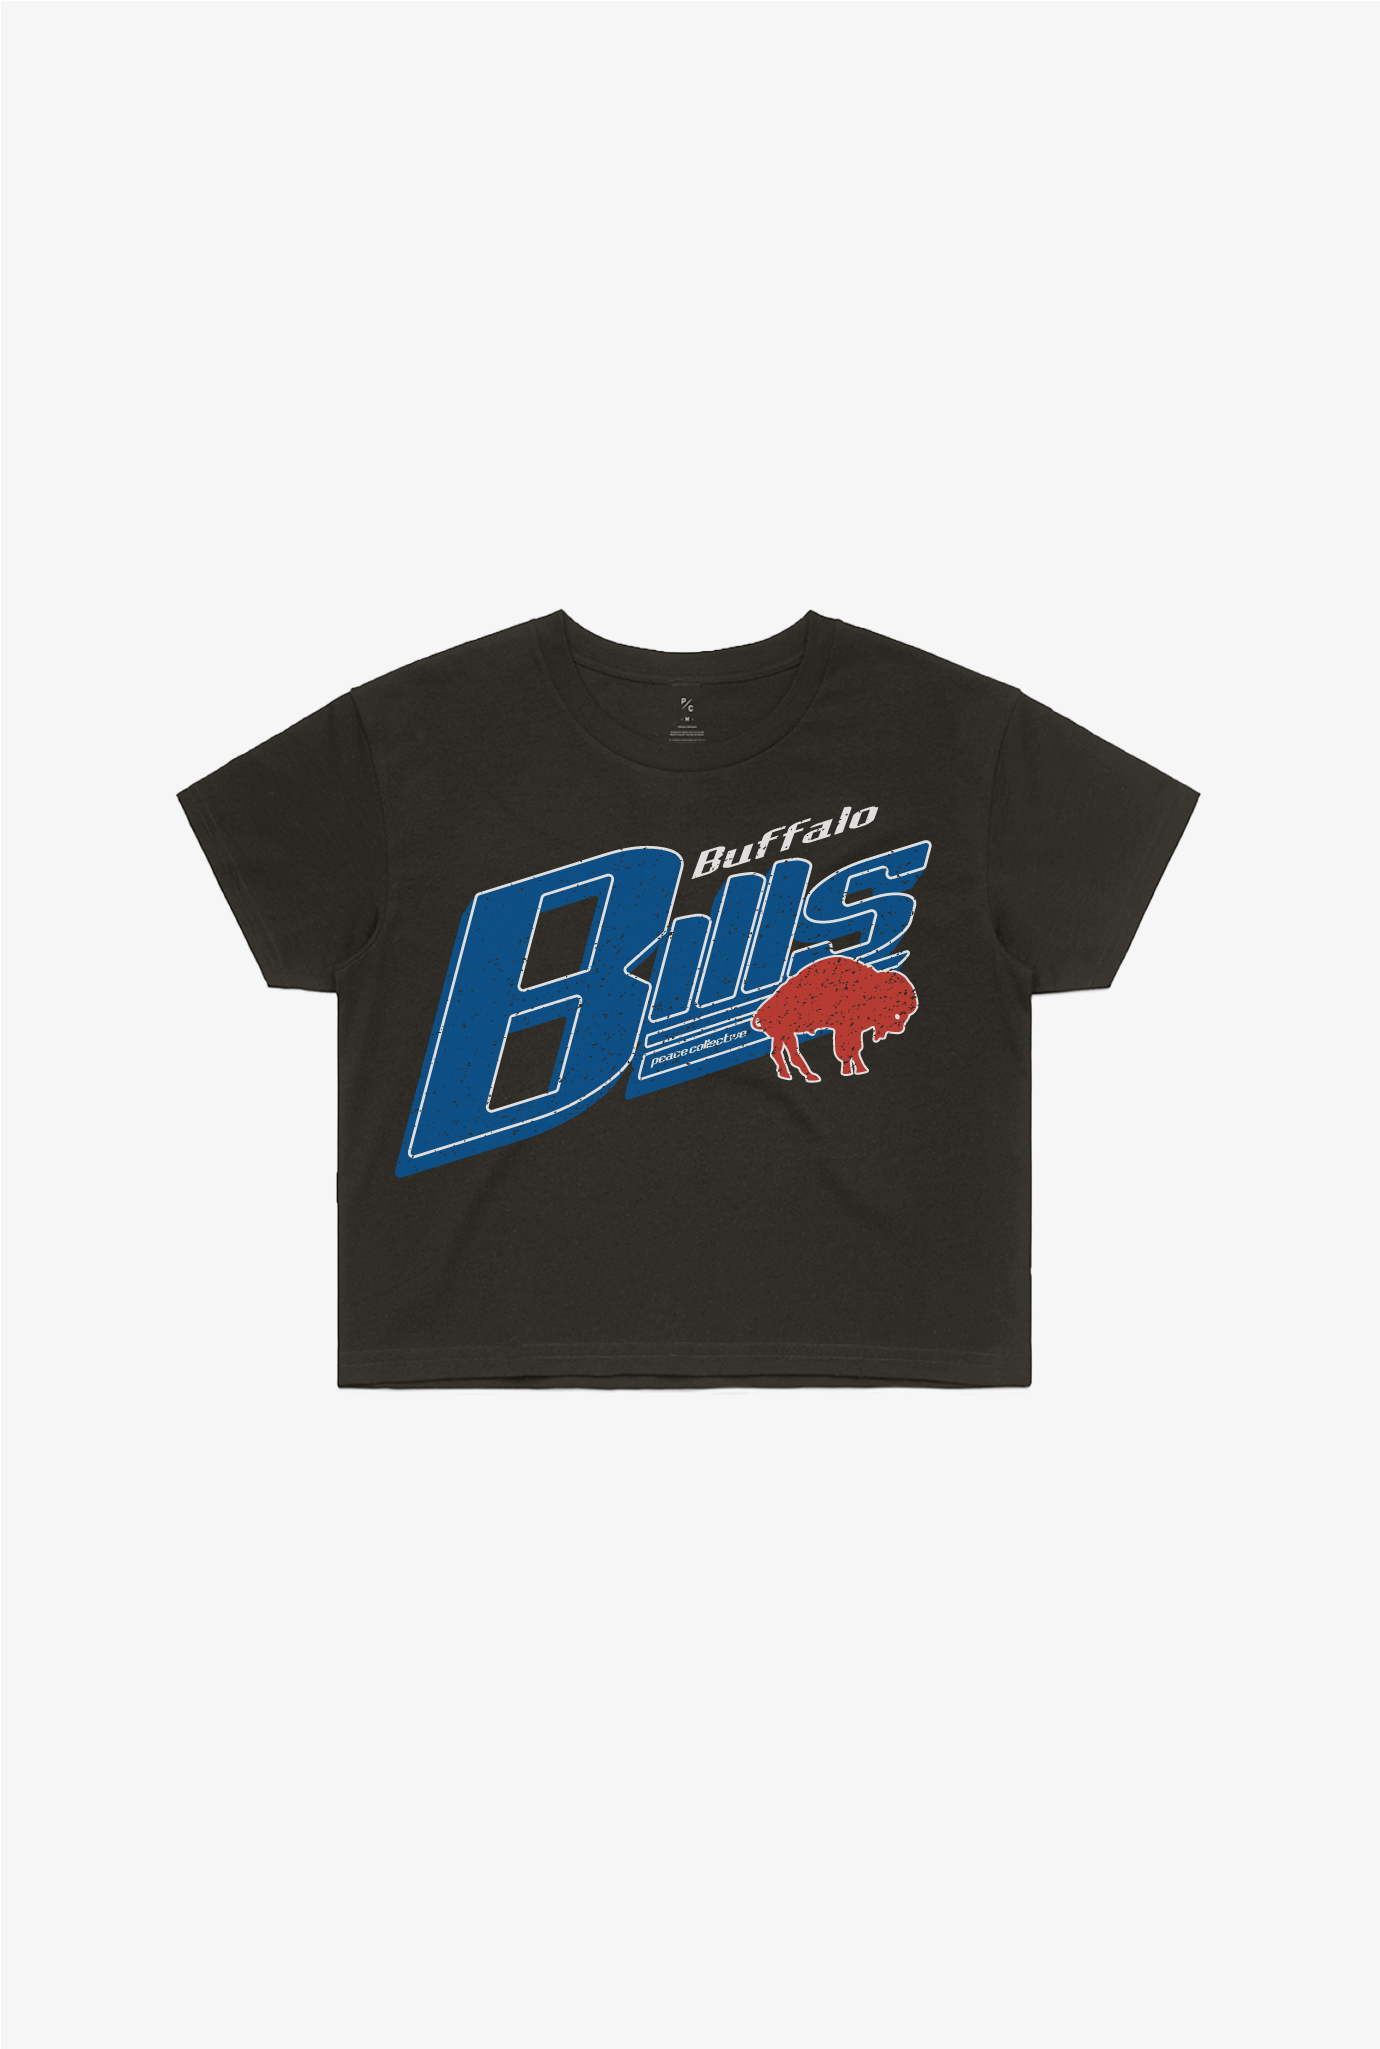 Buffalo Bills Garment Dyed Cropped T-Shirt - Black